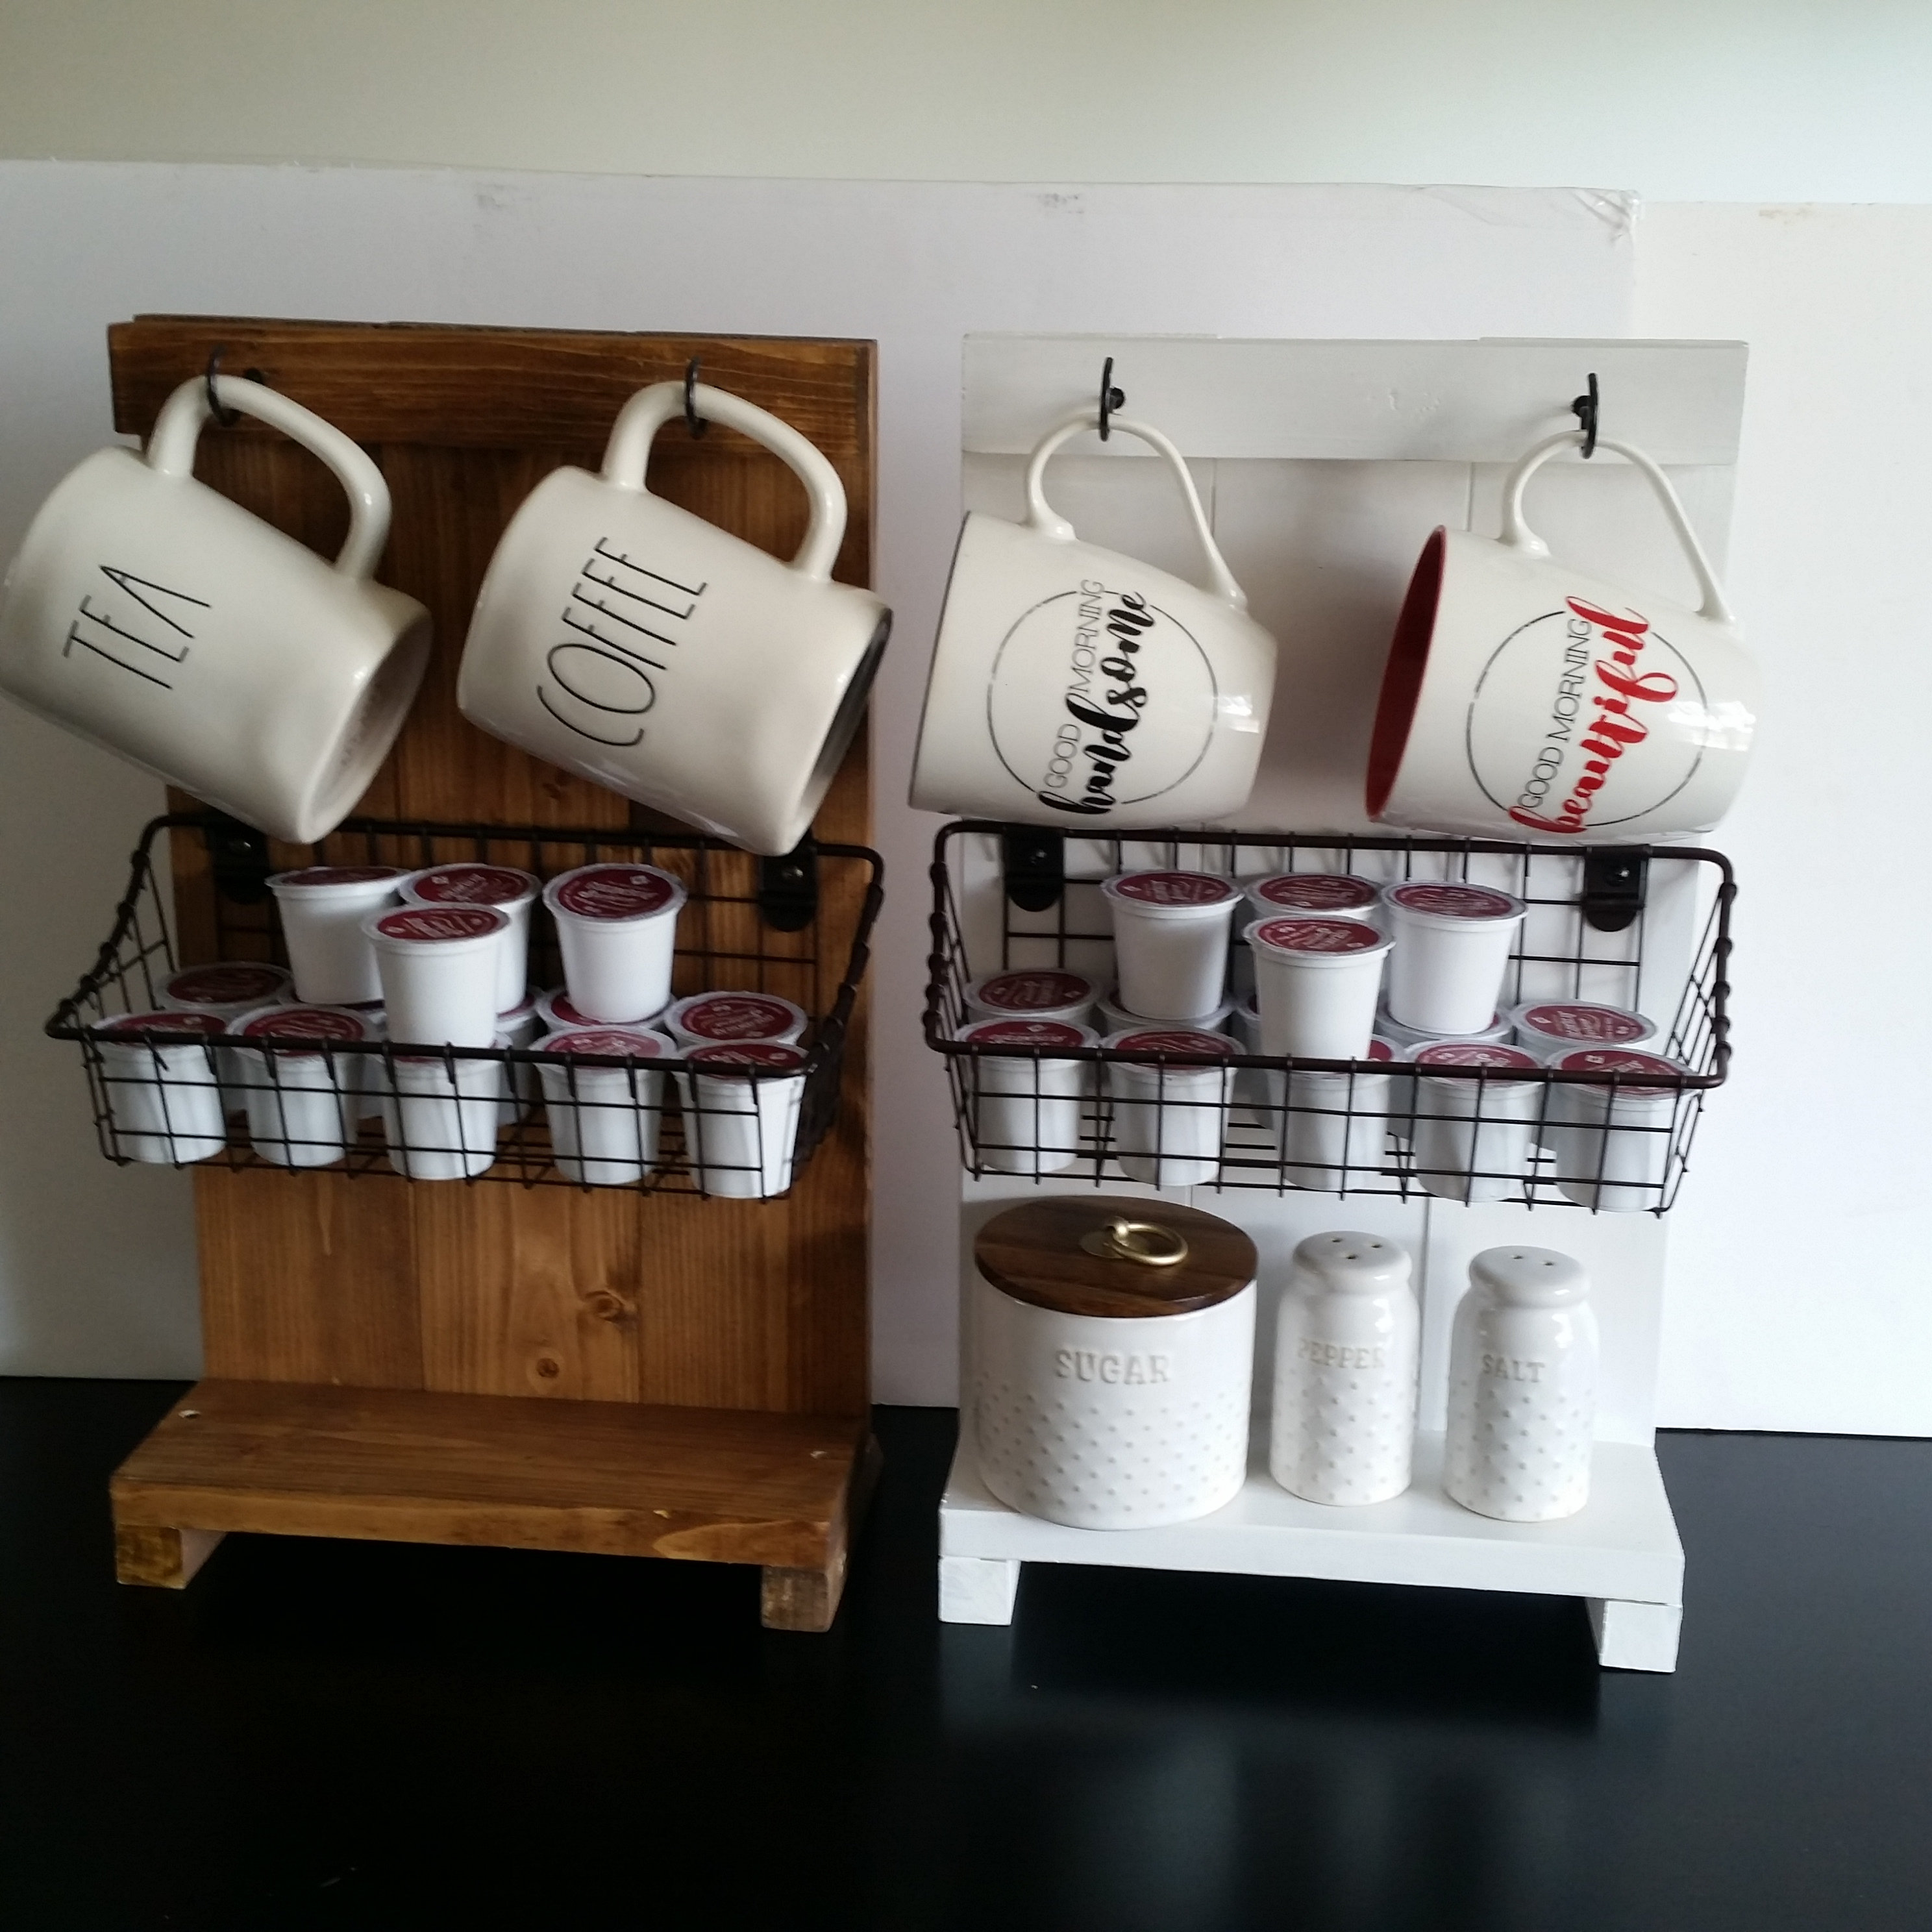 The Best Mug Racks - Where to Buy Coffee Mug Racks